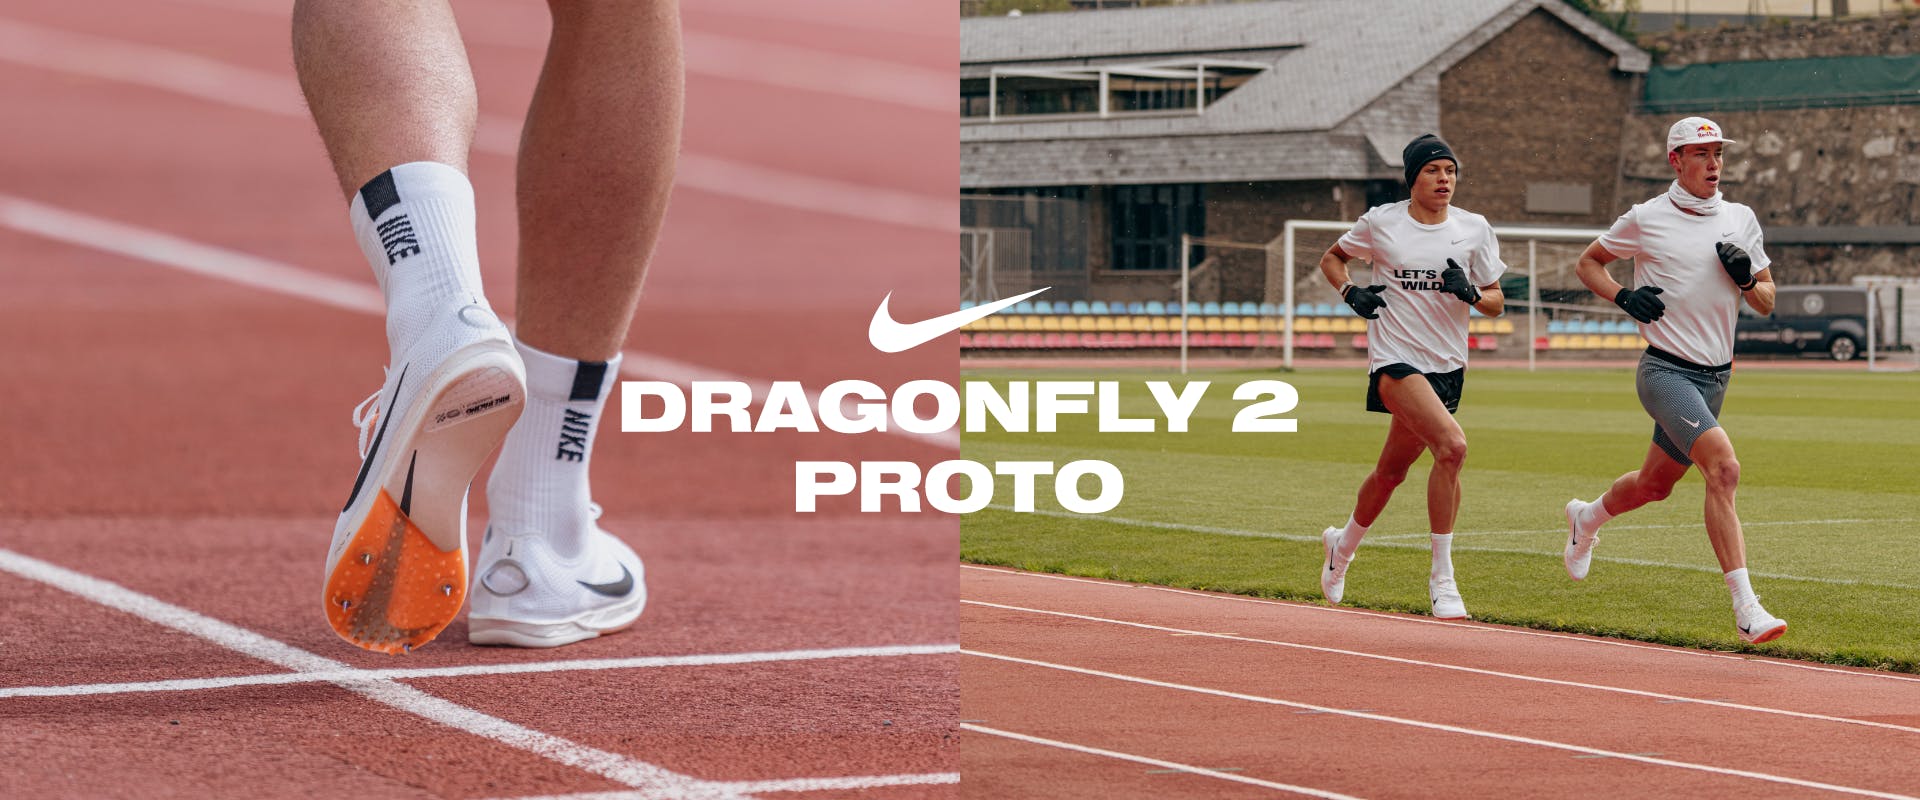 Nike Dragonfly 2 Proto